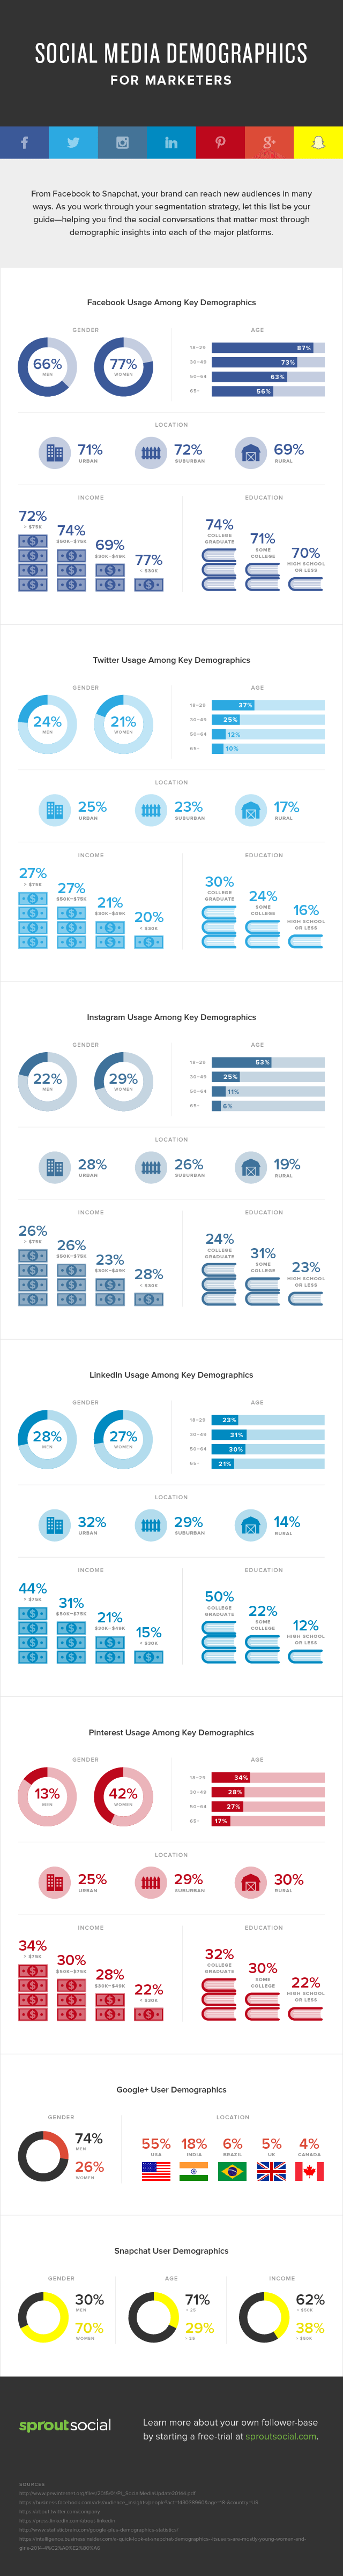 social-demographics_infographic